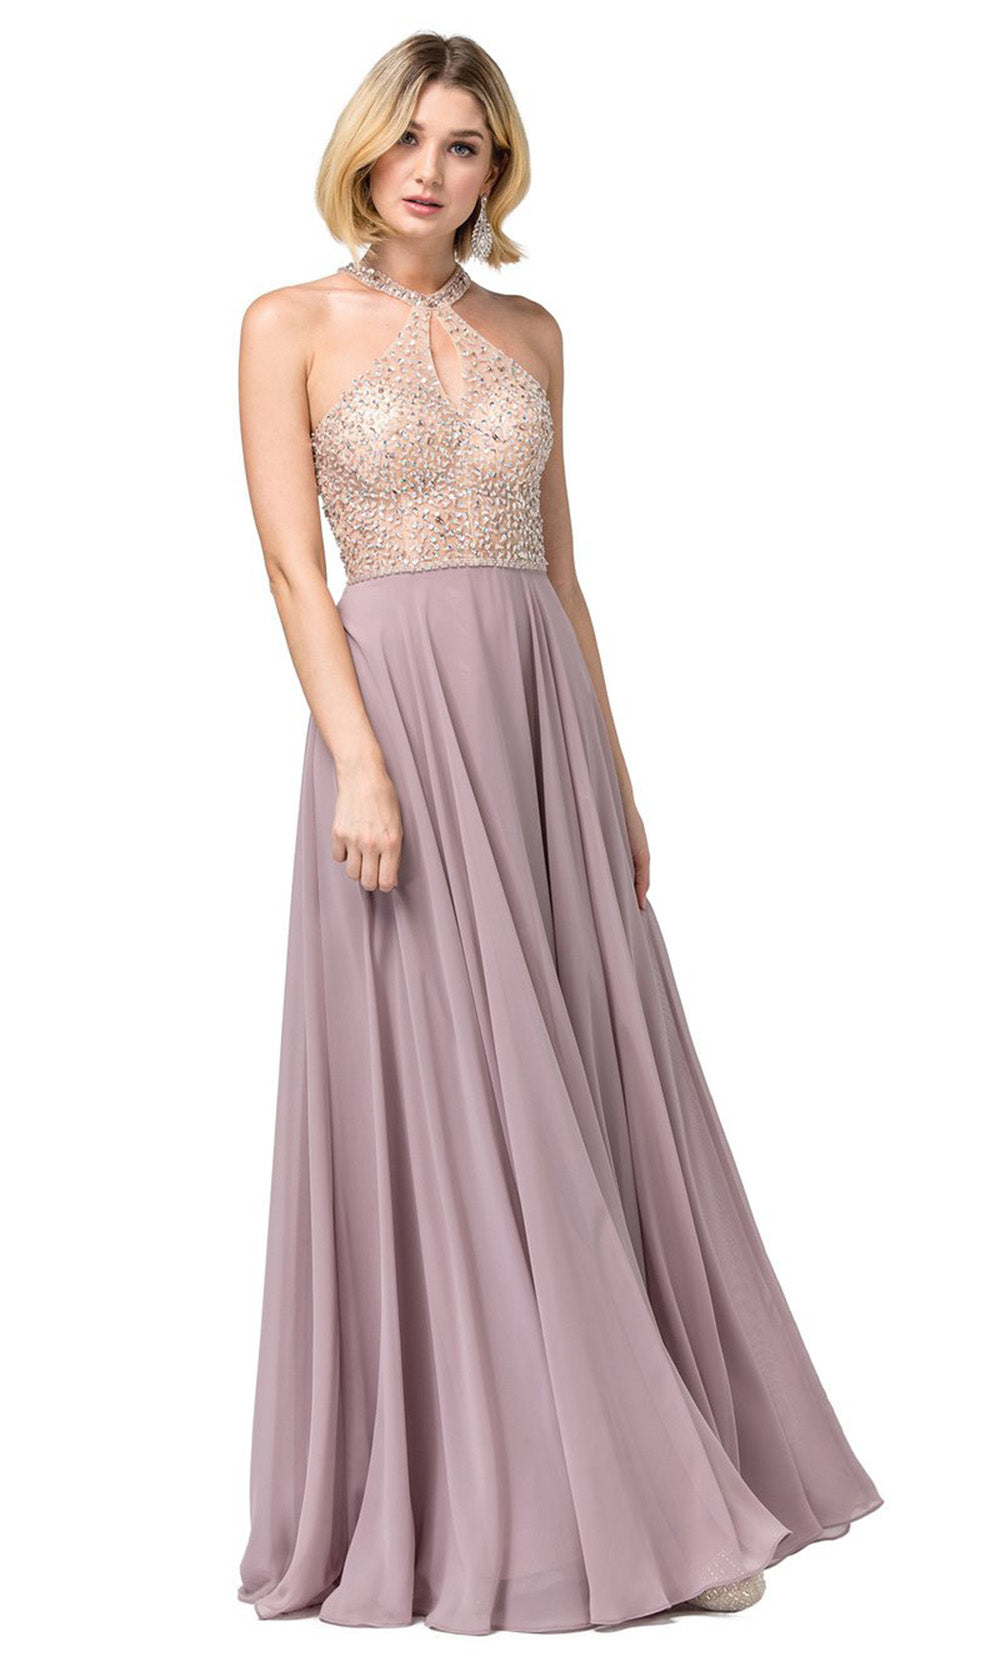 Dancing Queen - 2838 Bejeweled Cutout Halter A-Line Dress In Pink